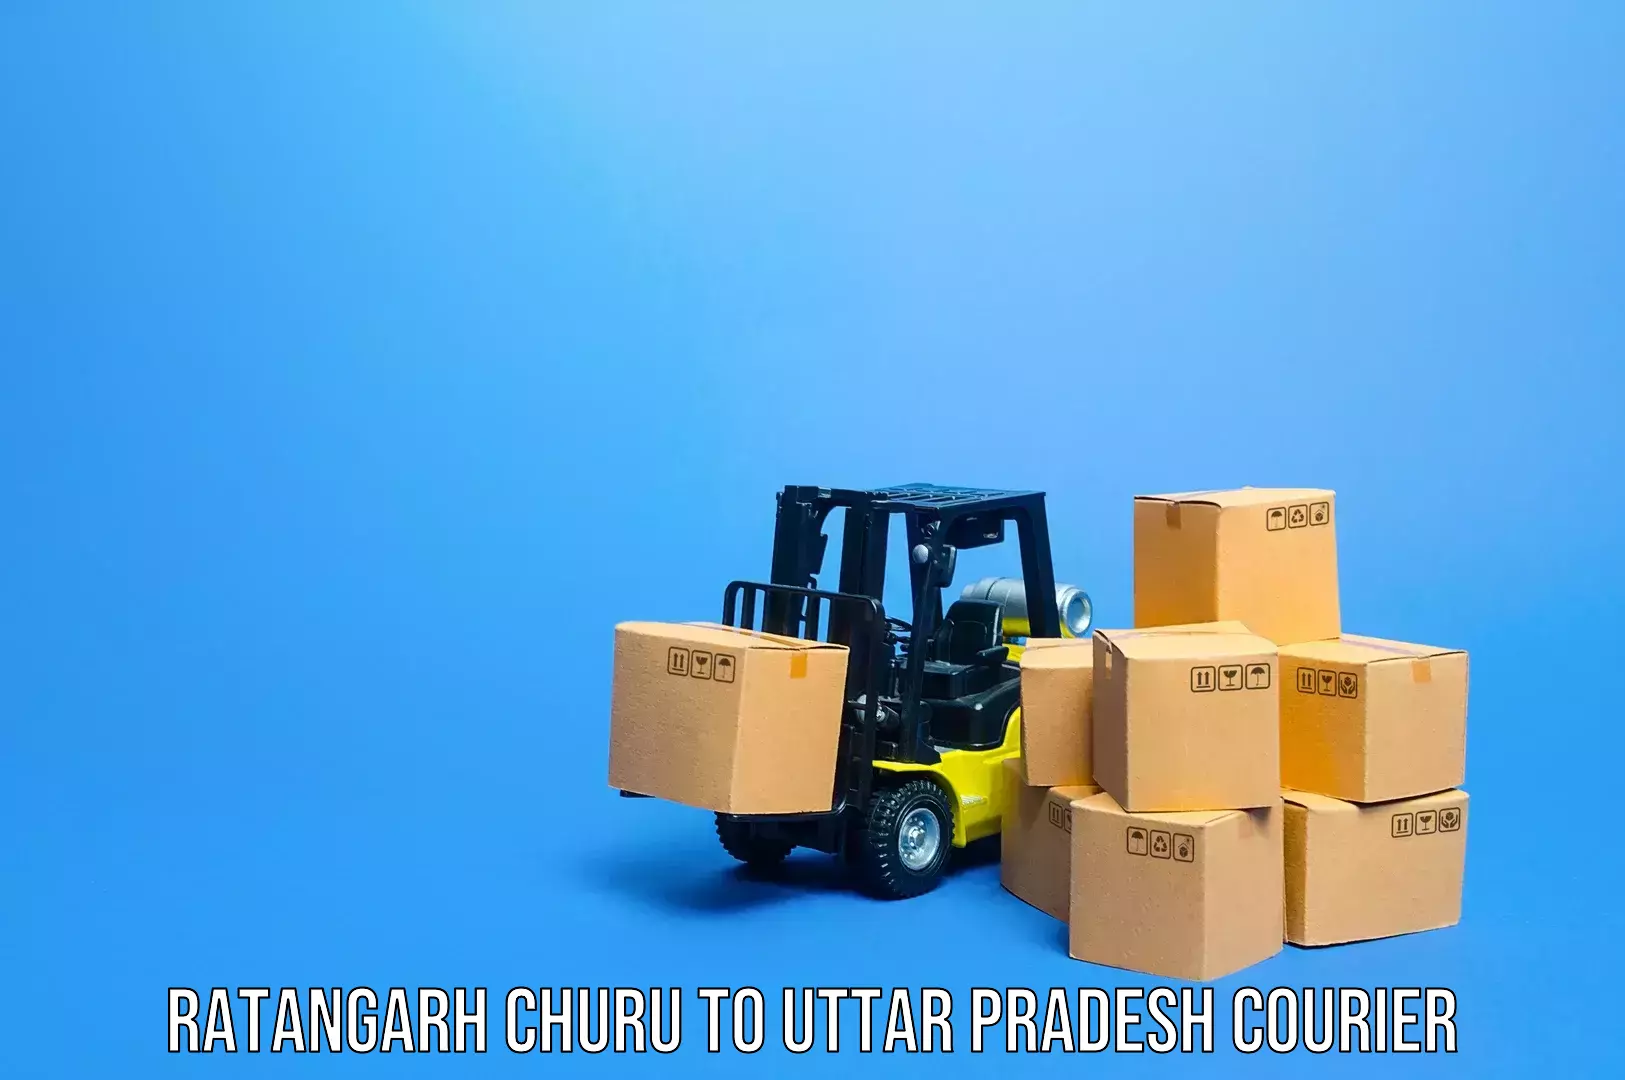 Baggage shipping service Ratangarh Churu to Mathura